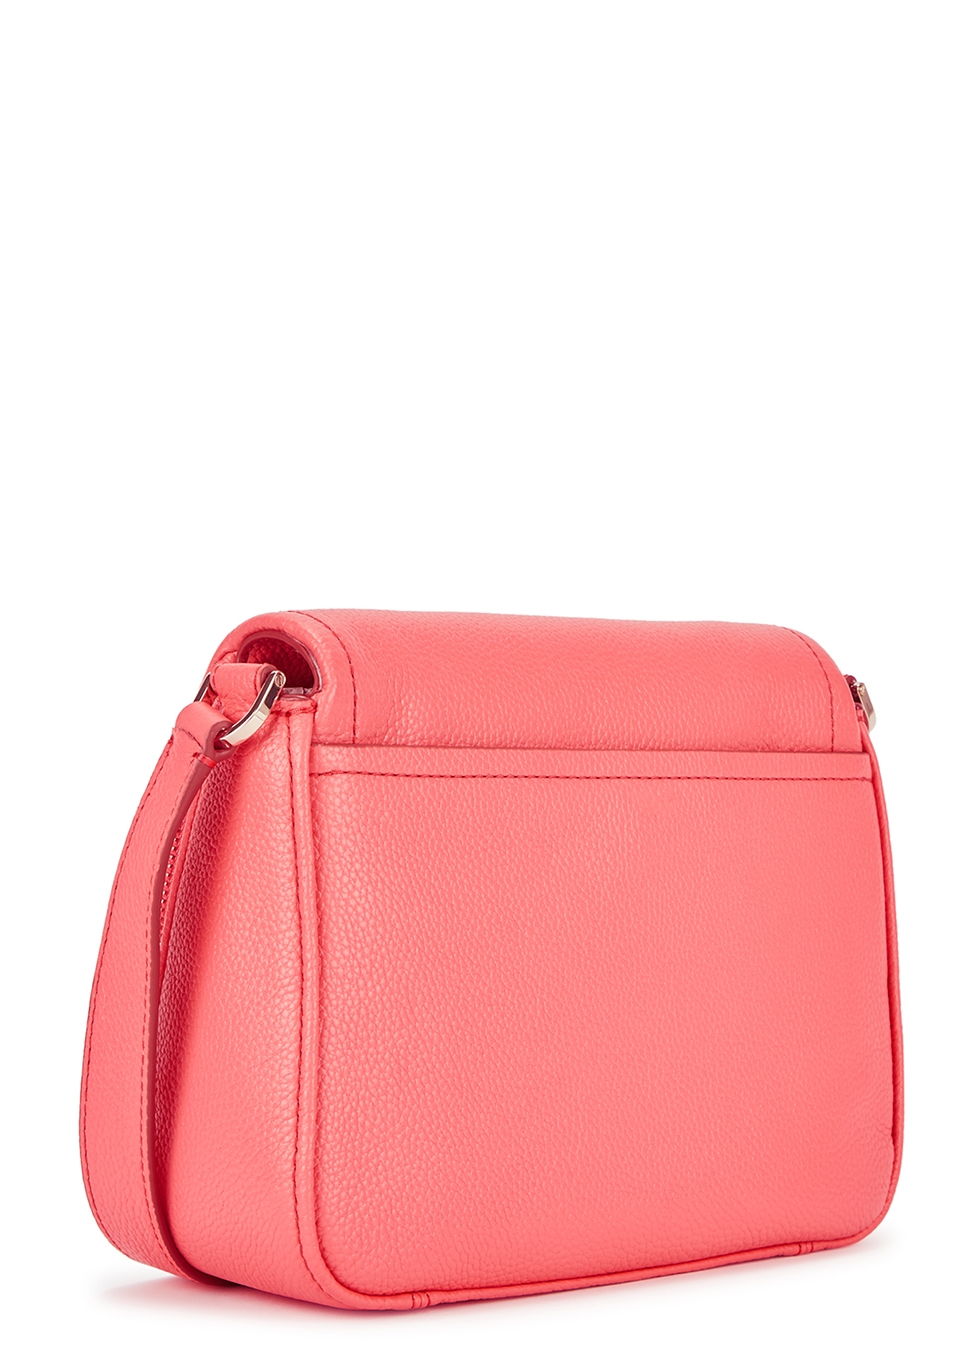 Pink Leather Handbags & Purses | Kate Spade New York